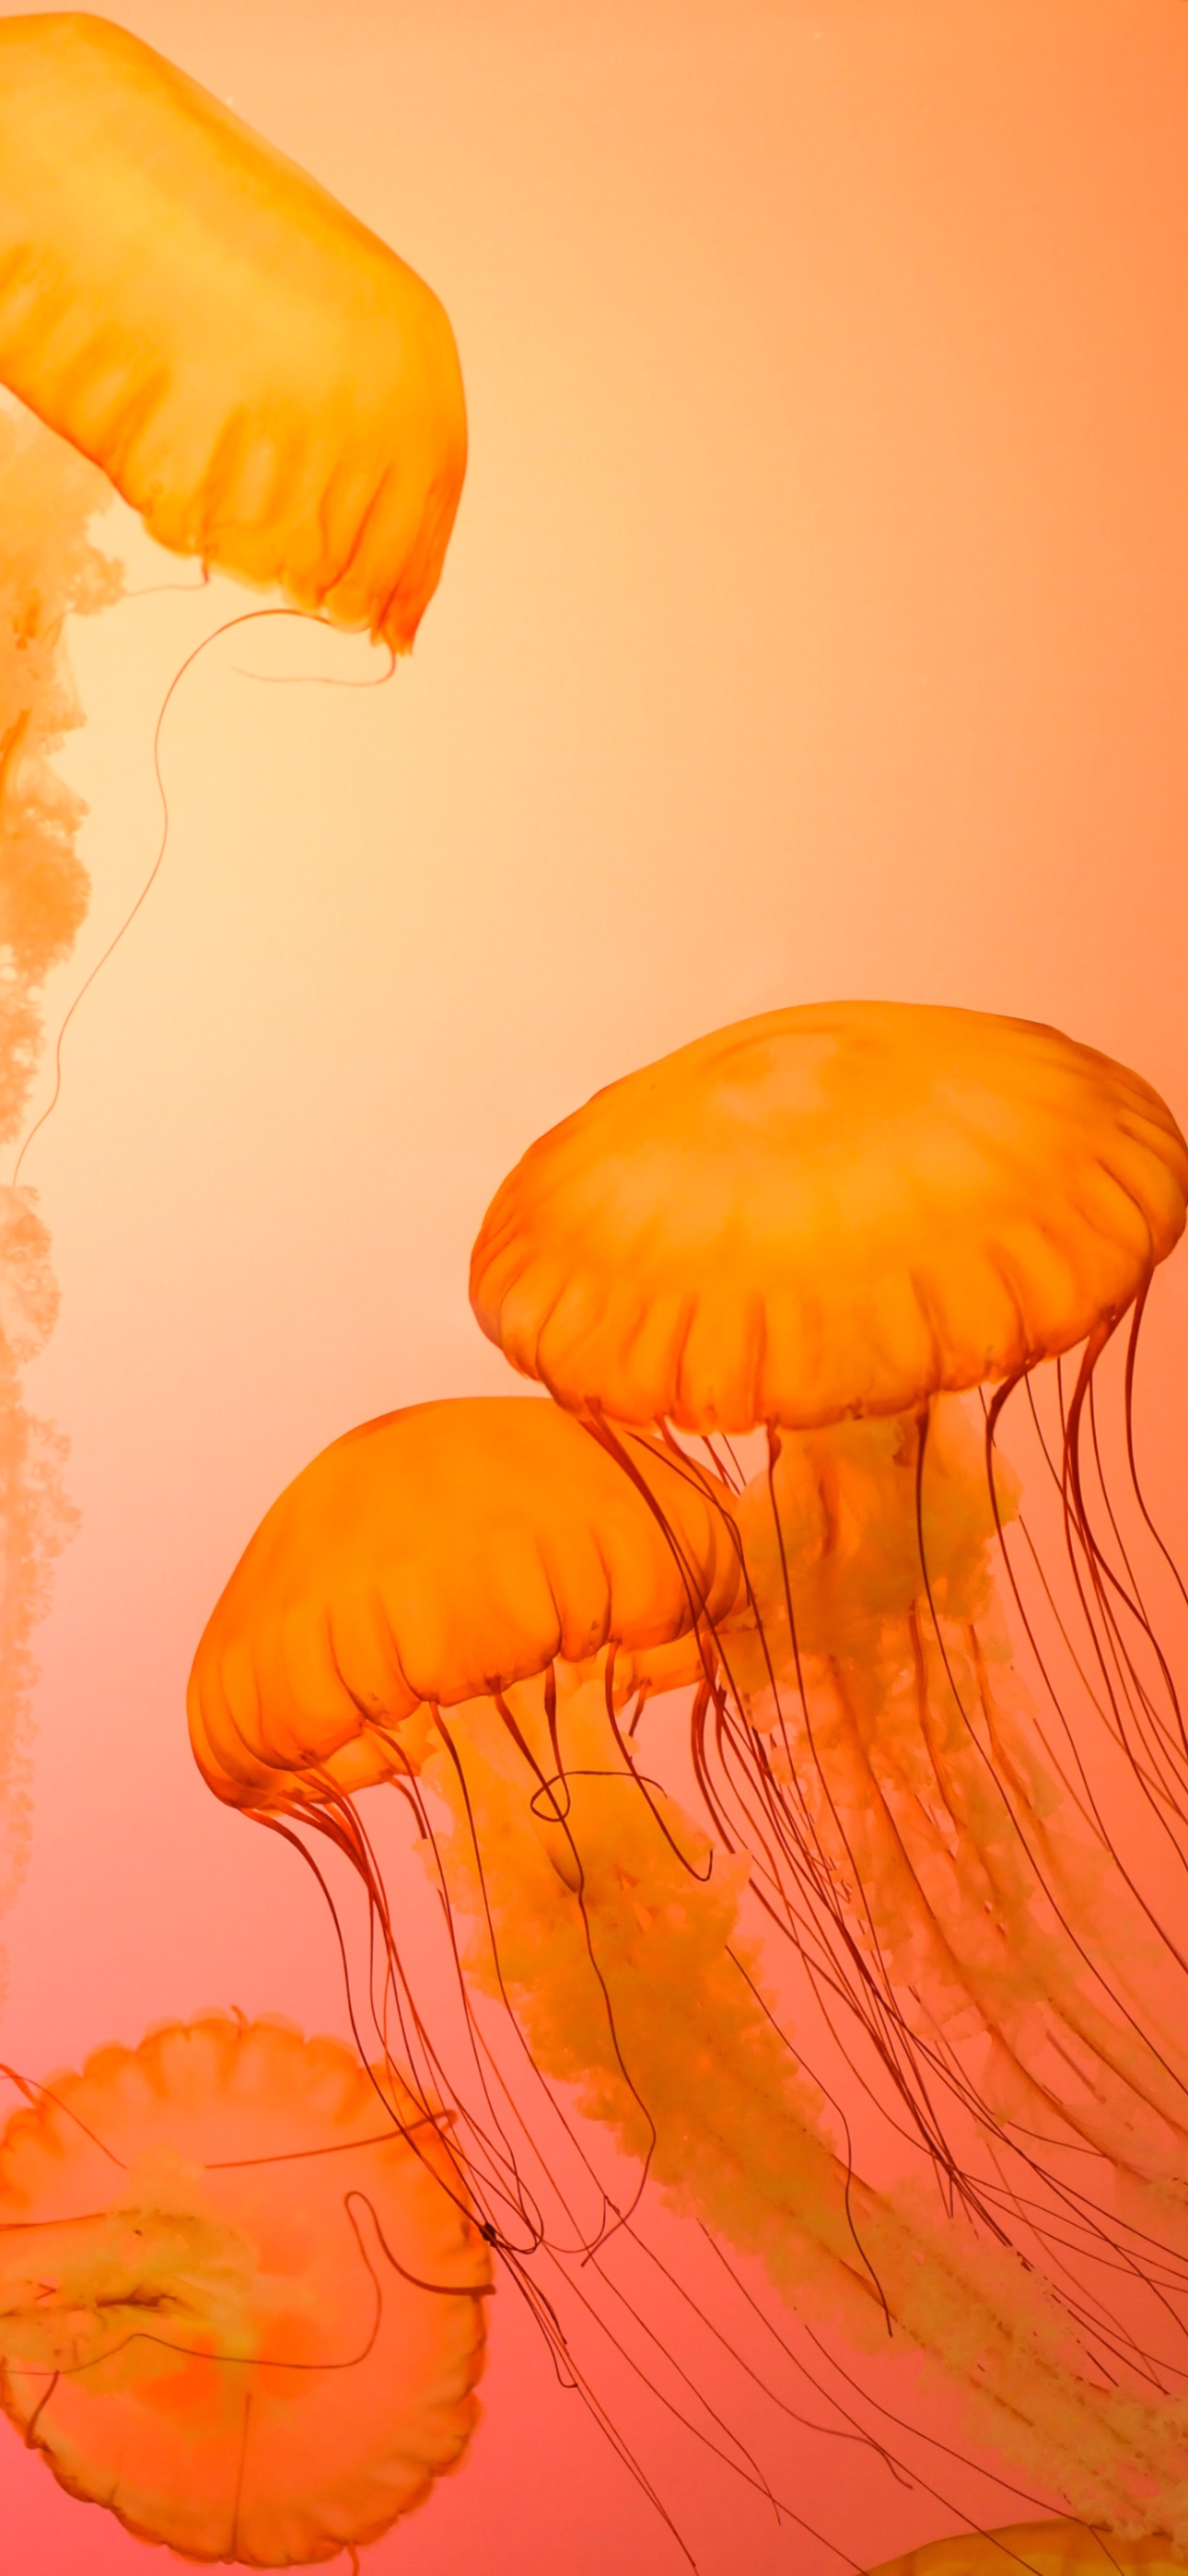 Orange jellyfish iPhone wallpaper Zetong